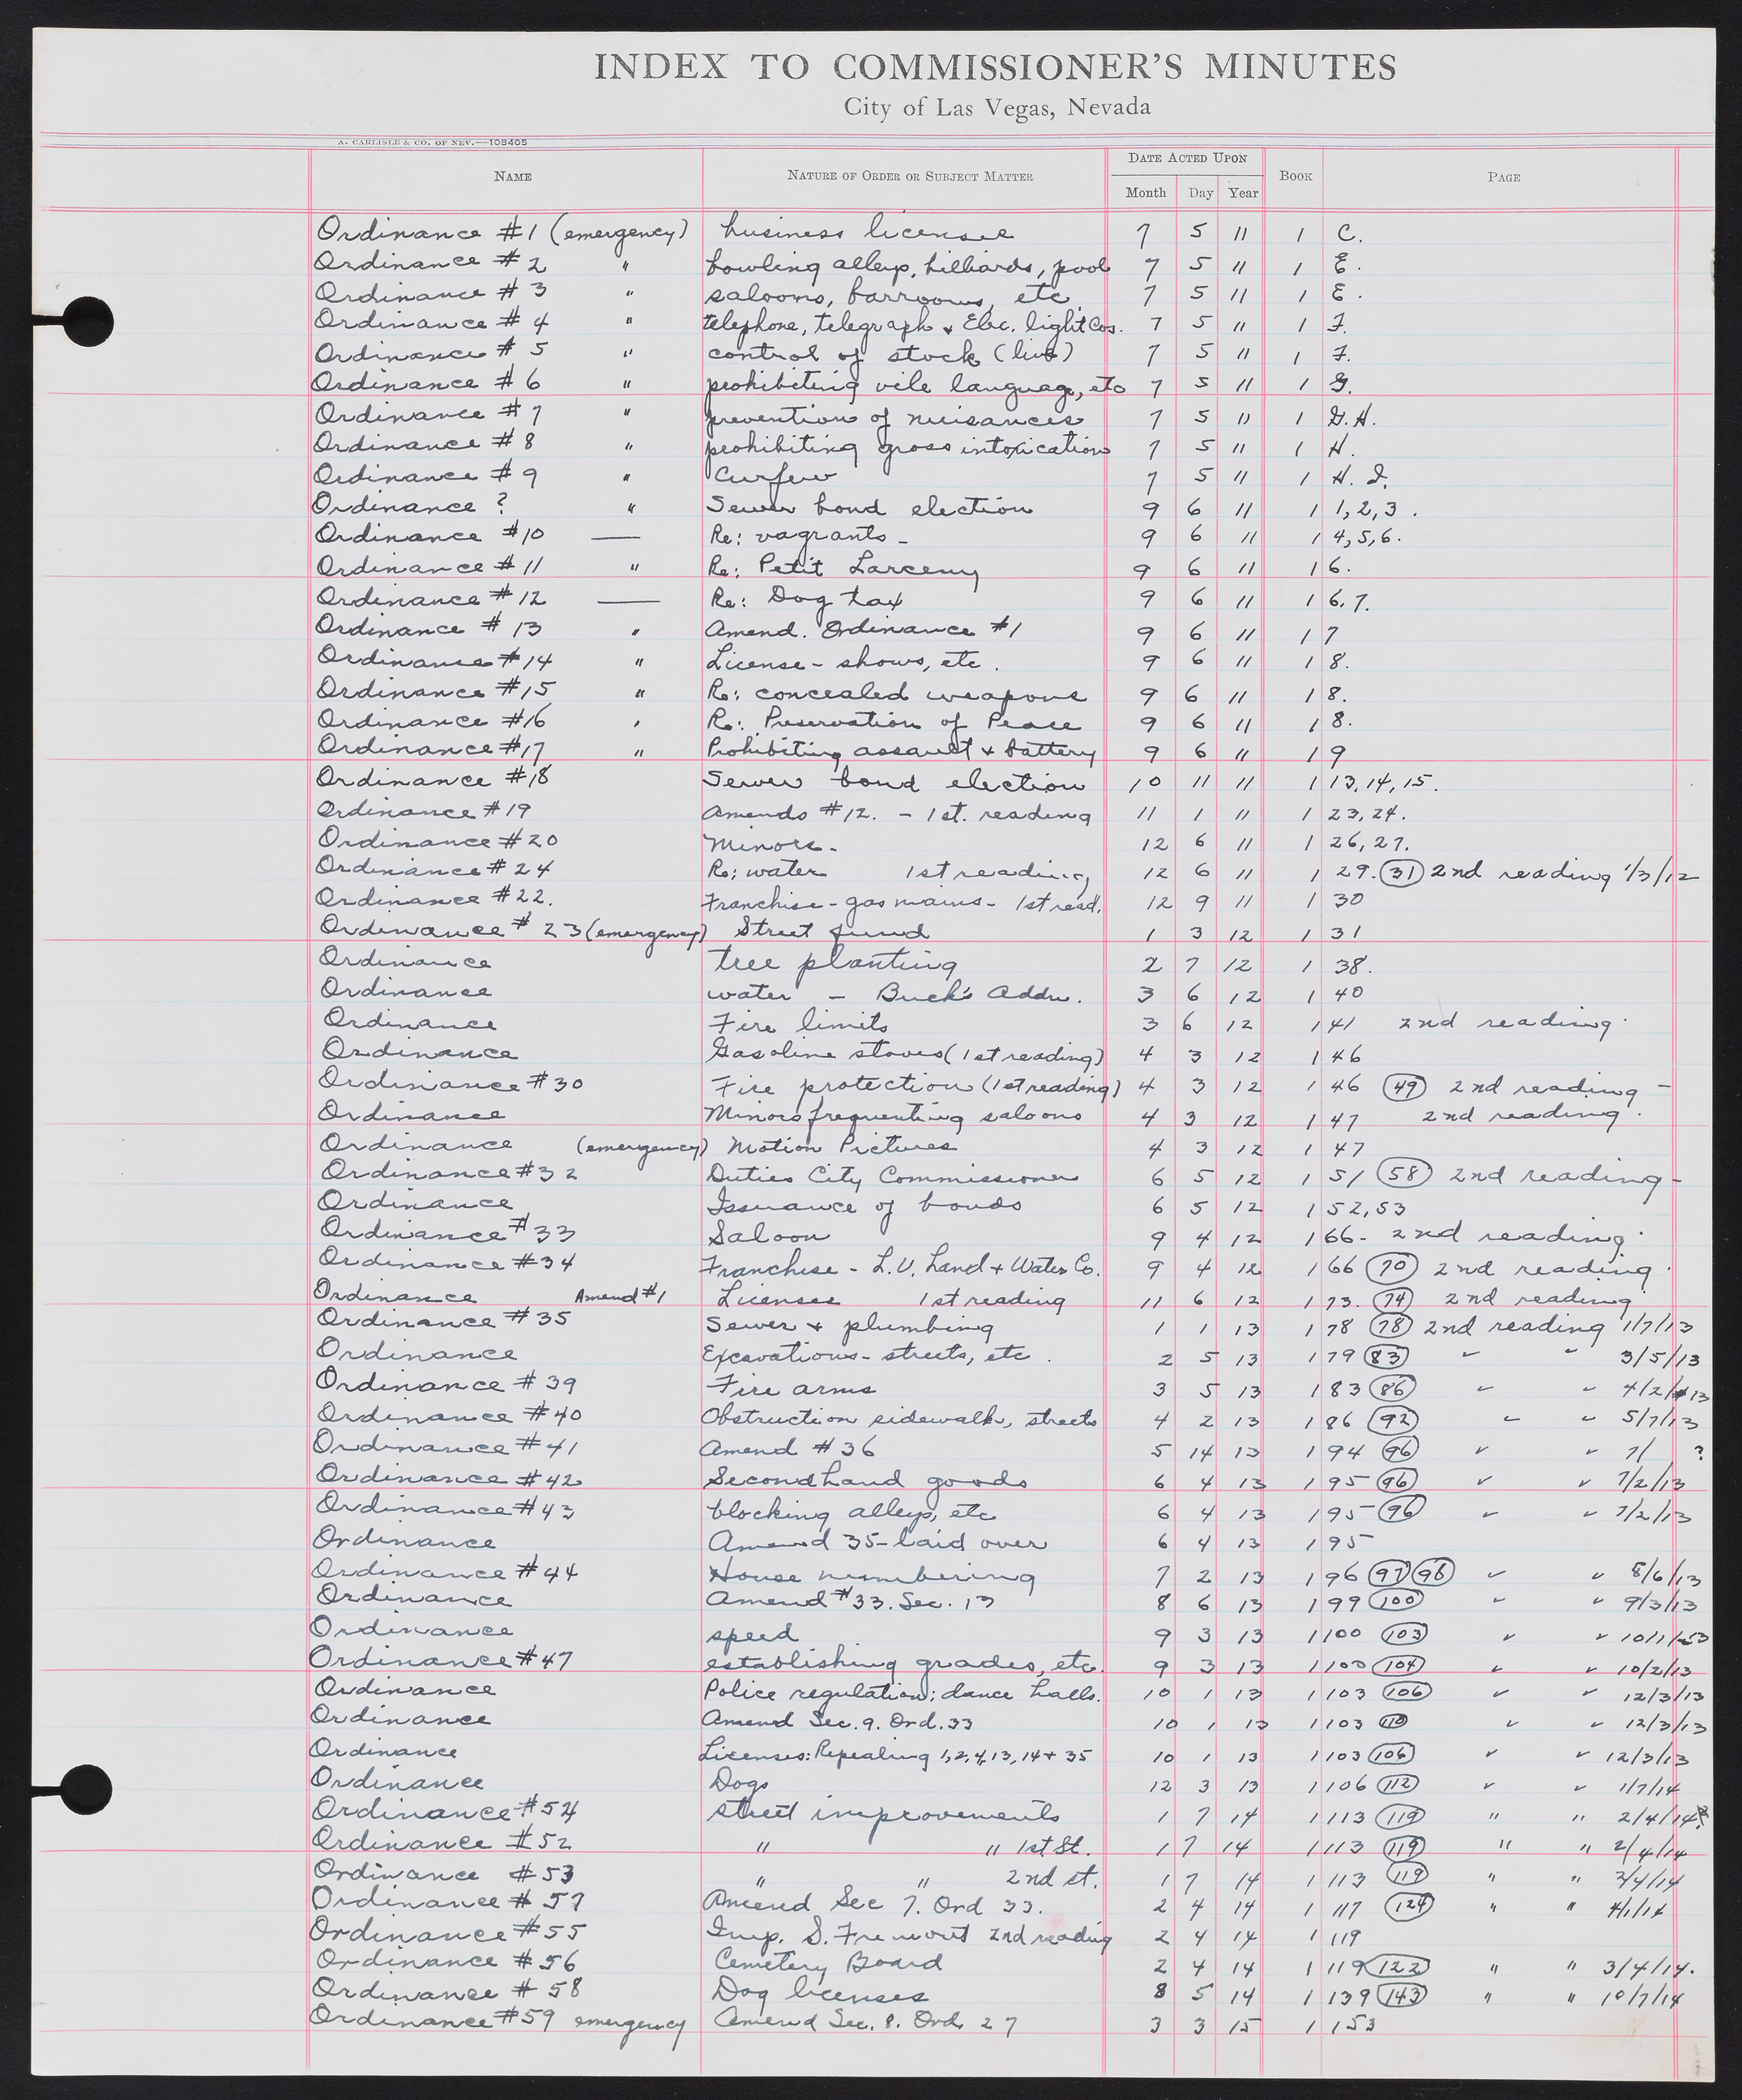 Las Vegas City Commission Minutes Index 1, 1911-1960: documents, item 197